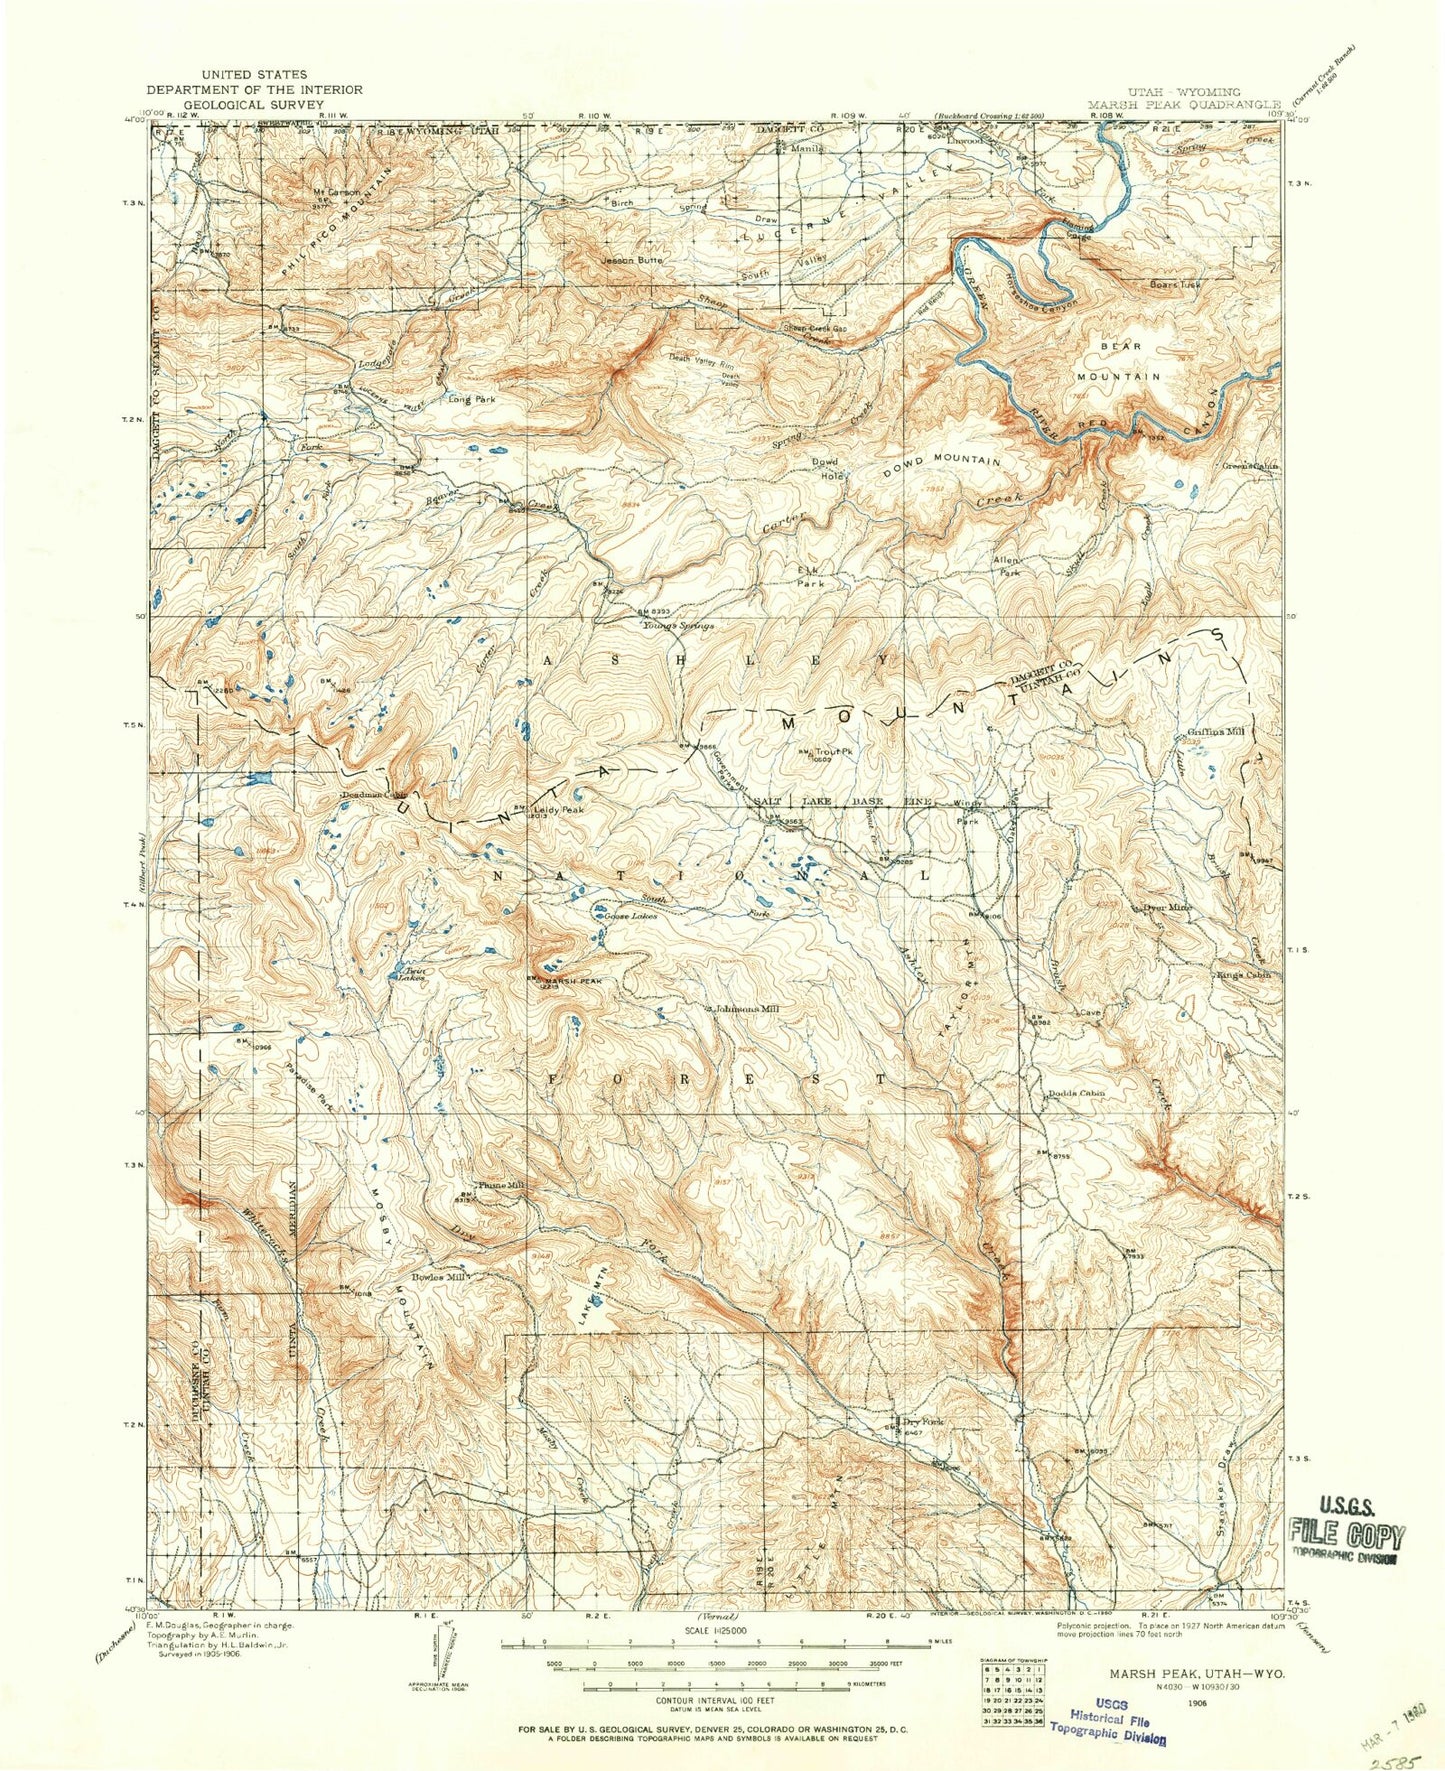 Historic 1906 Marsh Peak Utah 30'x30' Topo Map Image